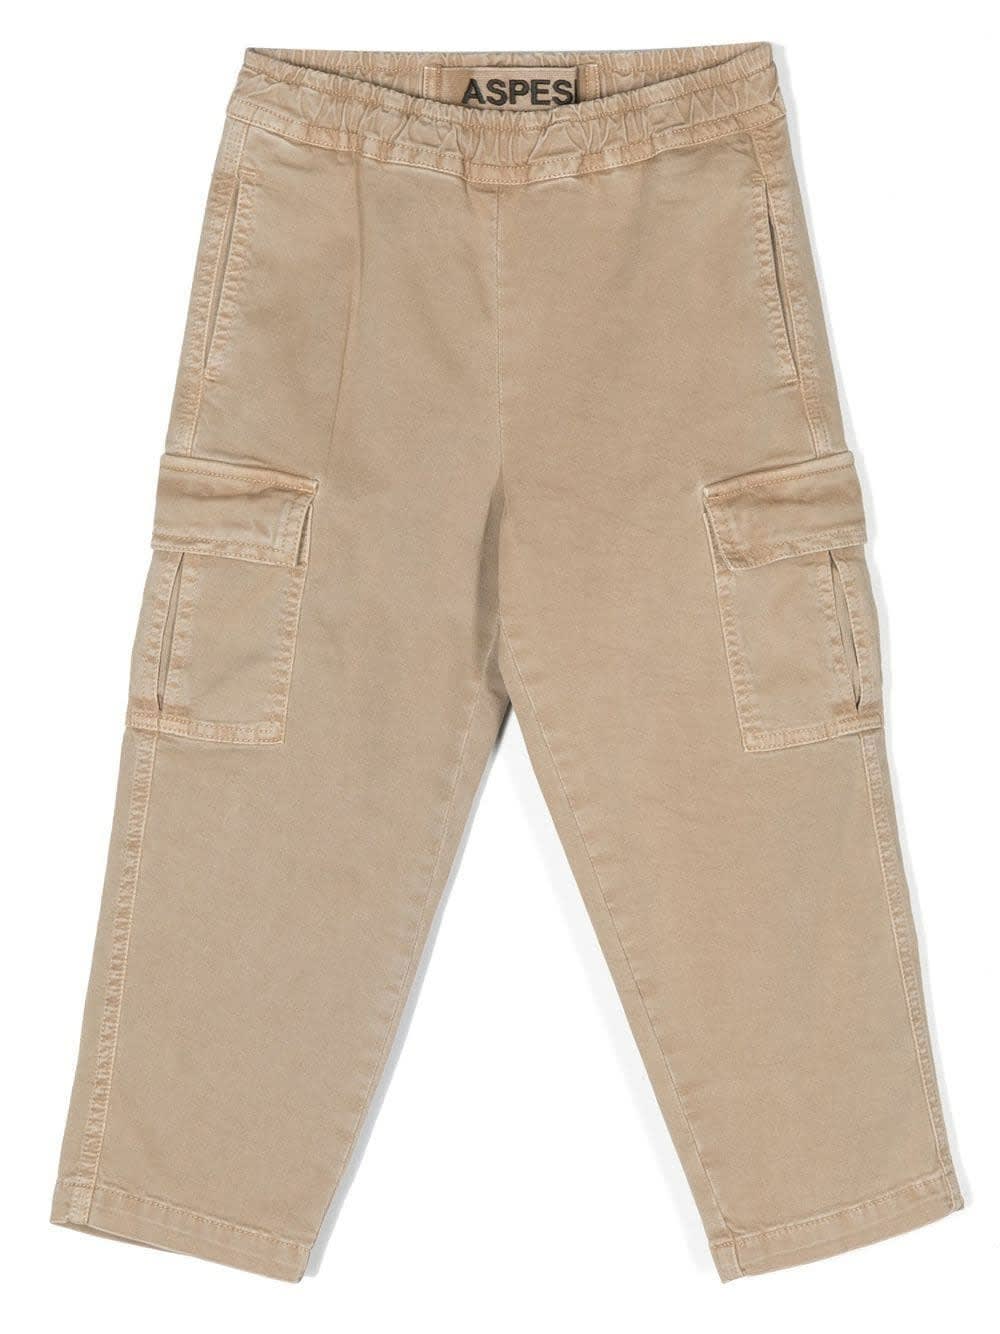 Aspesi Beige Cotton Cargo Kids Trousers